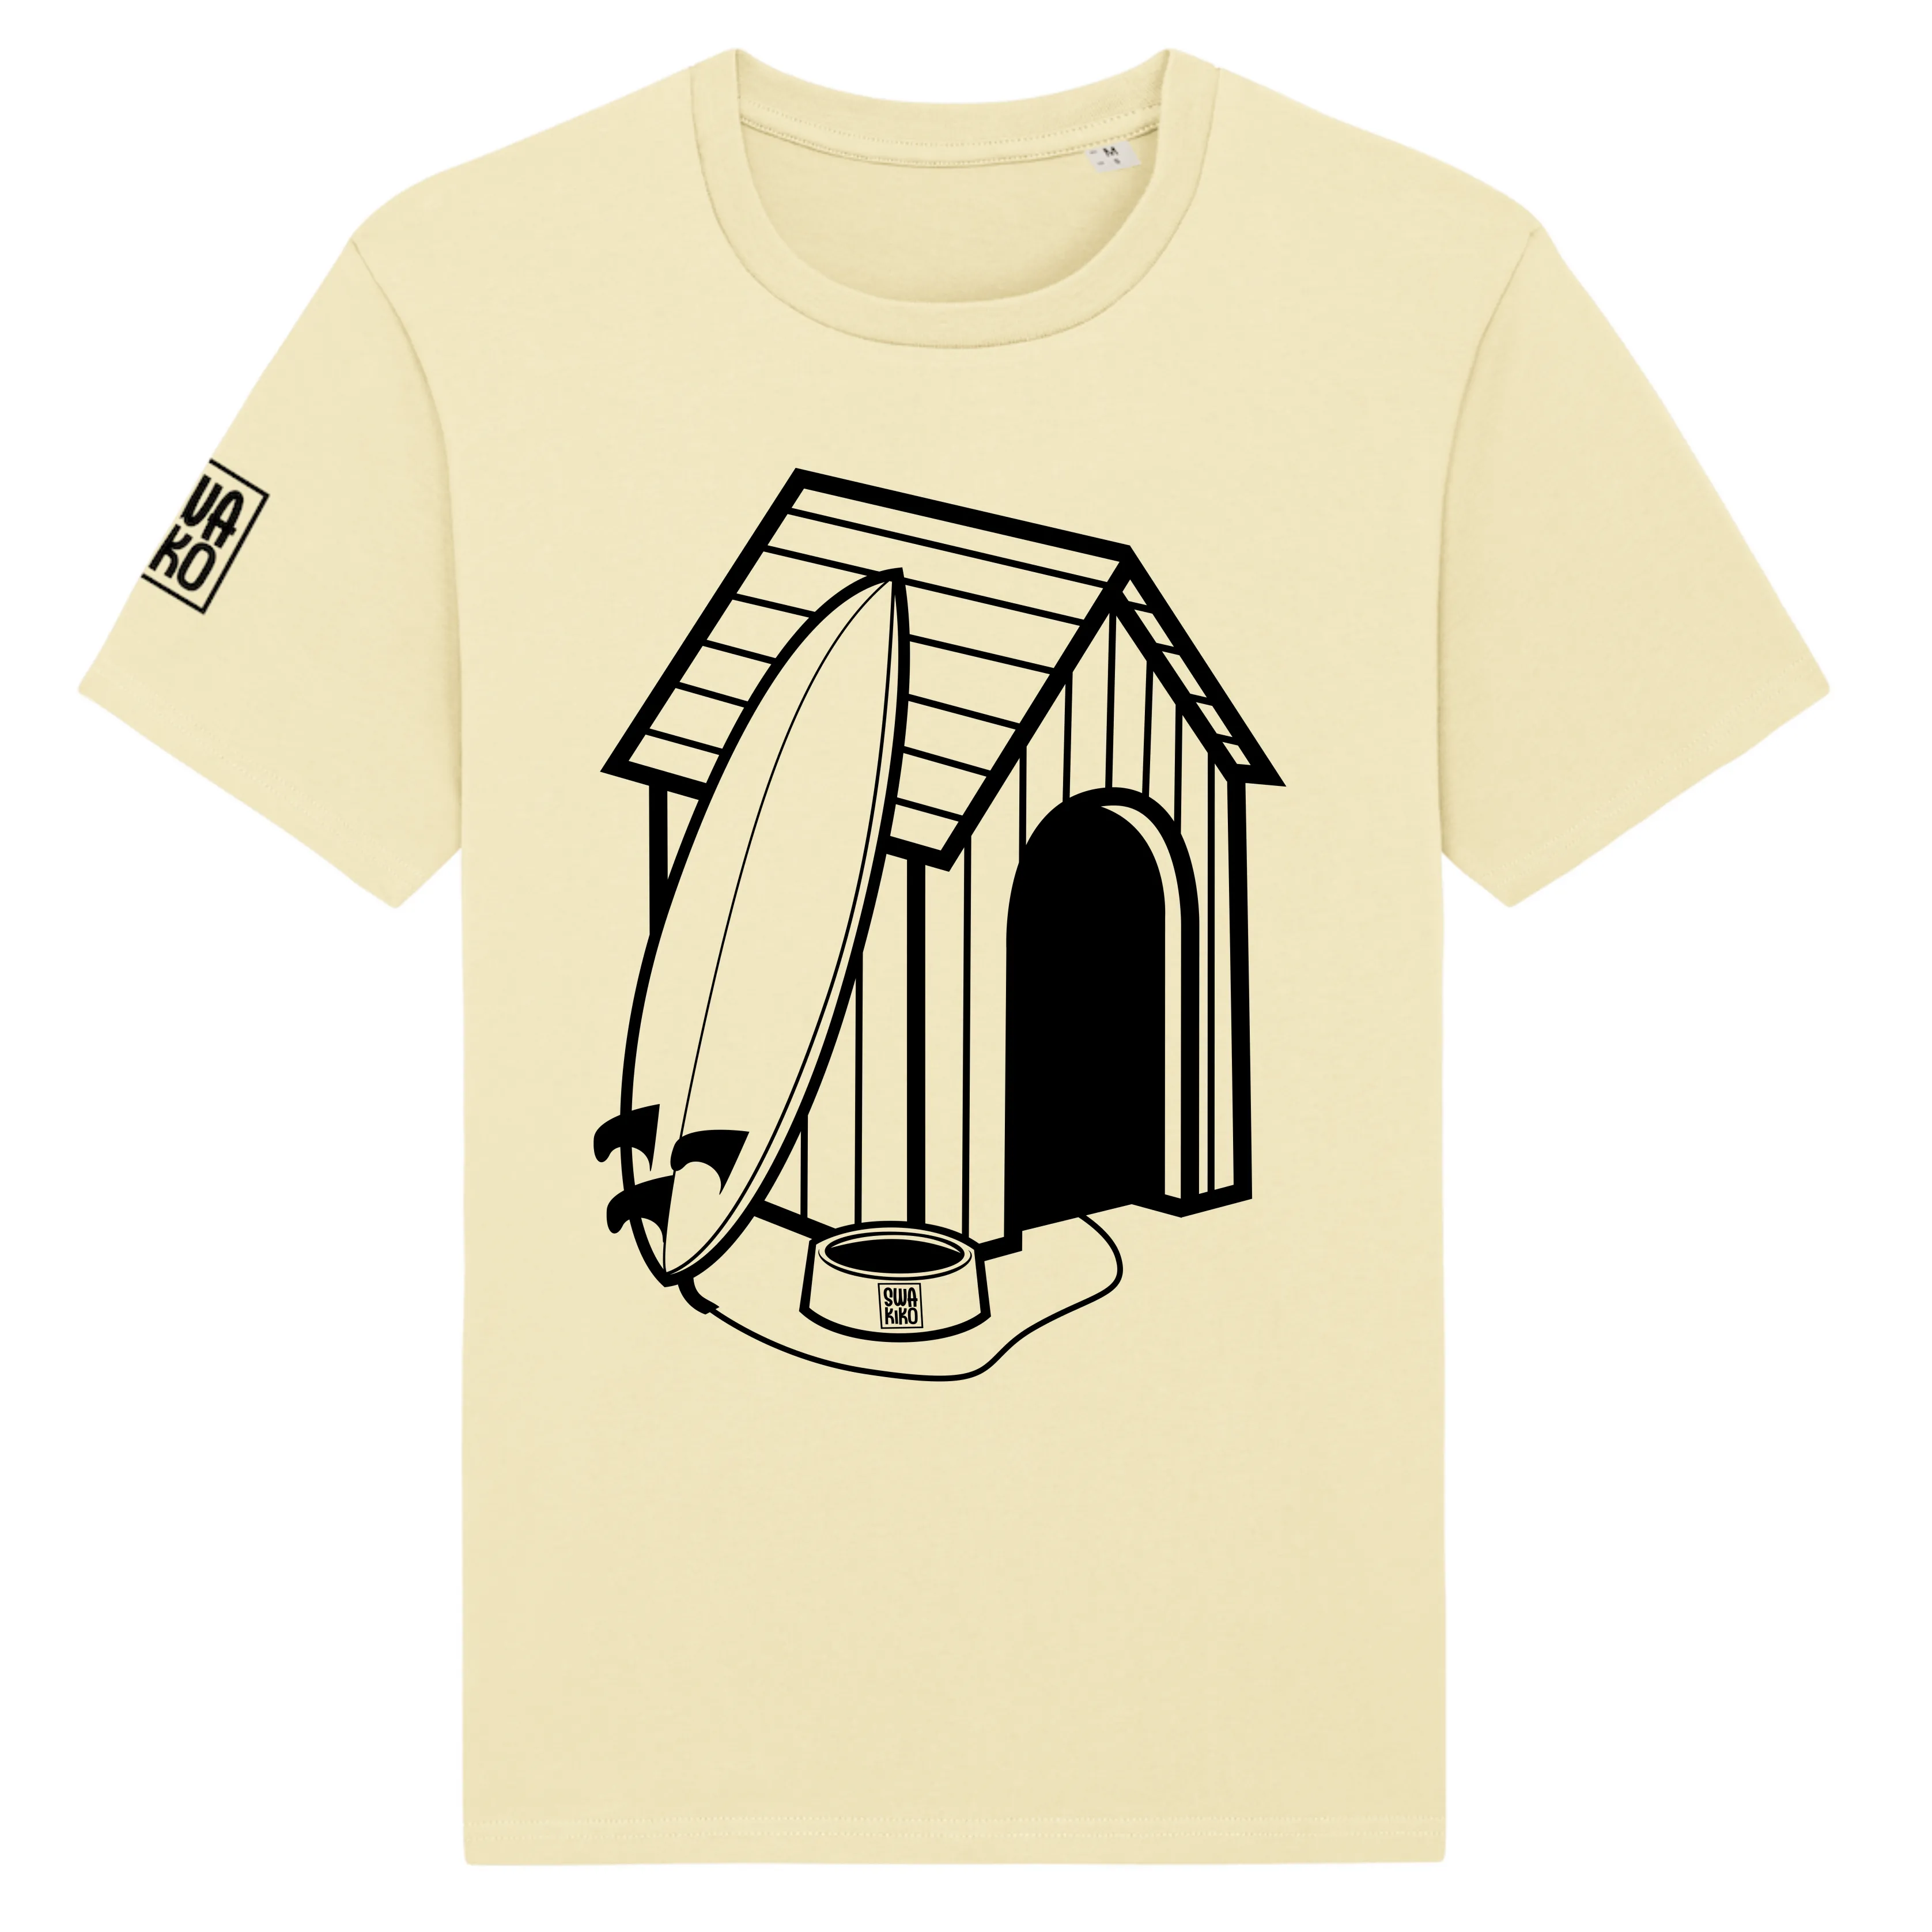 Doghouse Unisex T-shirt